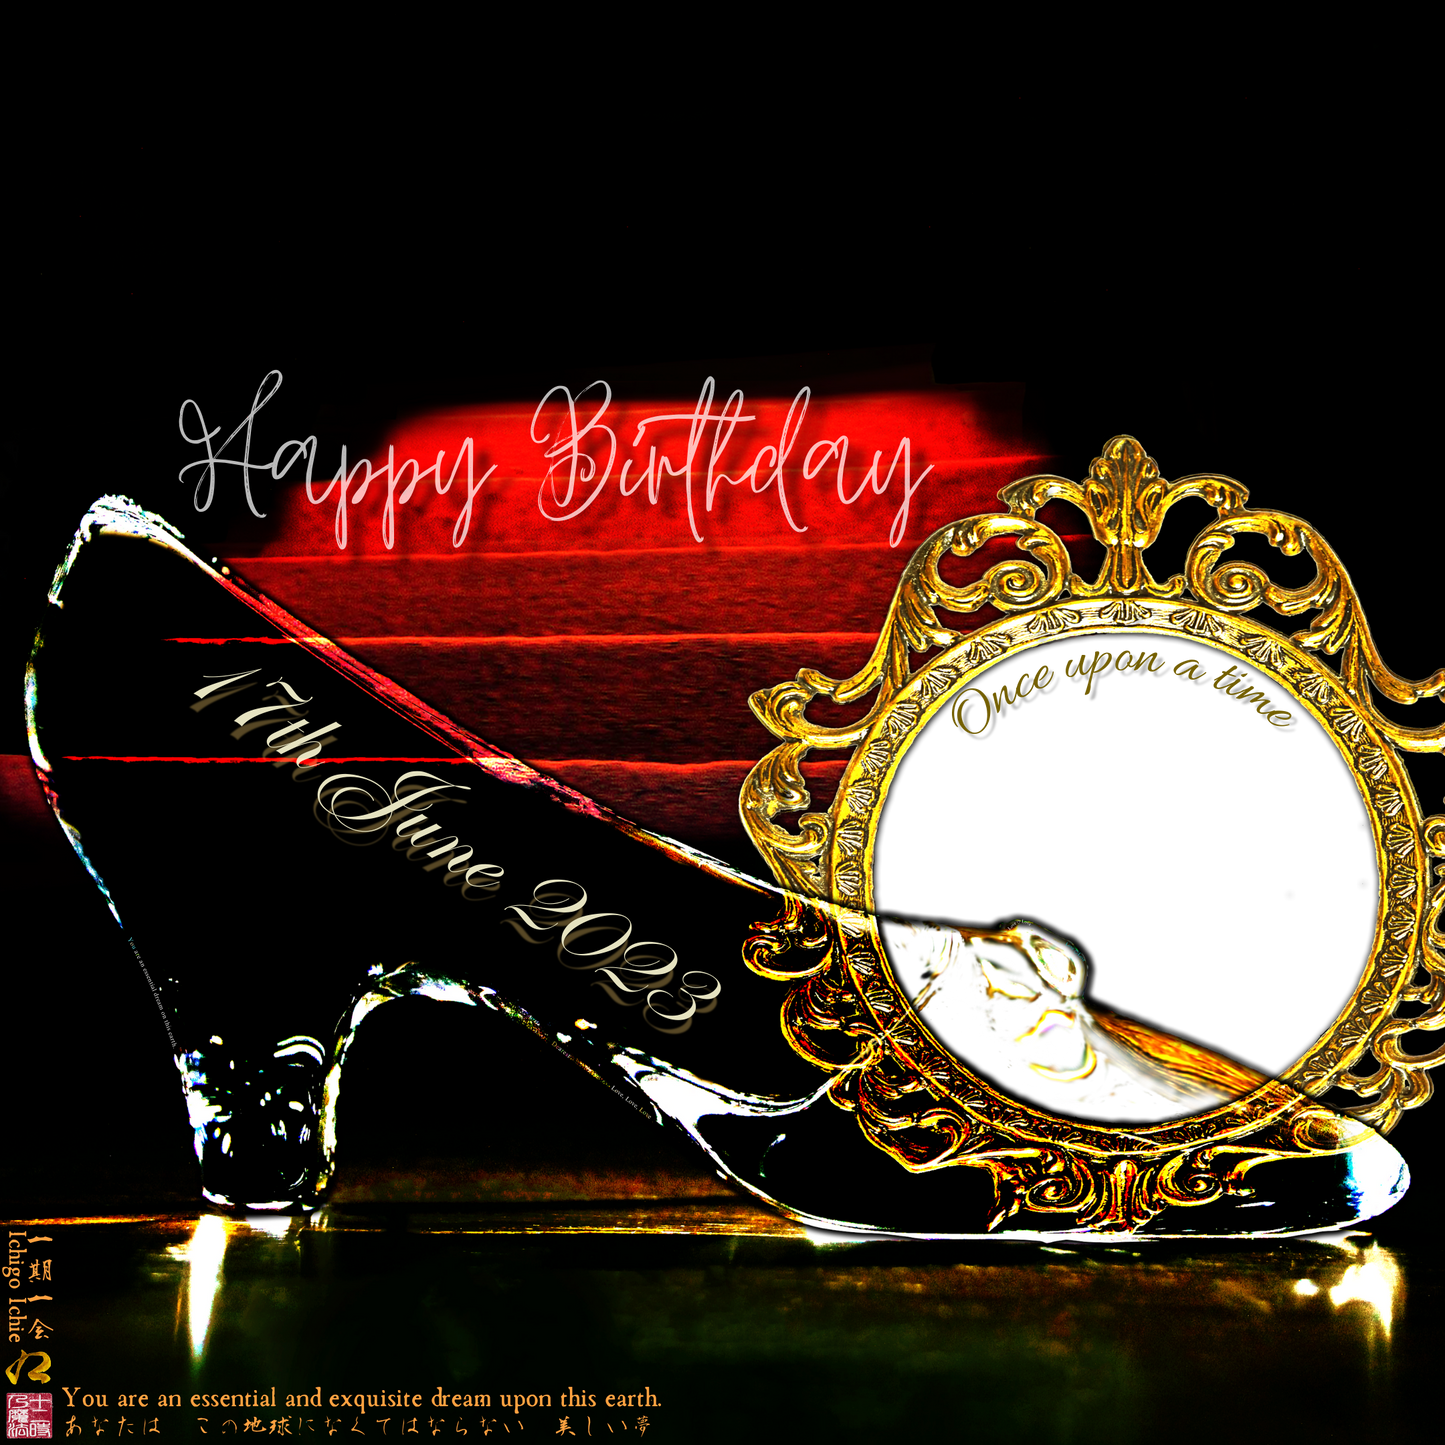 Happy Birthday Glass Slipper "Ichigo Ichie" 17th June 2023 the Right (1-of-1) NFT Art